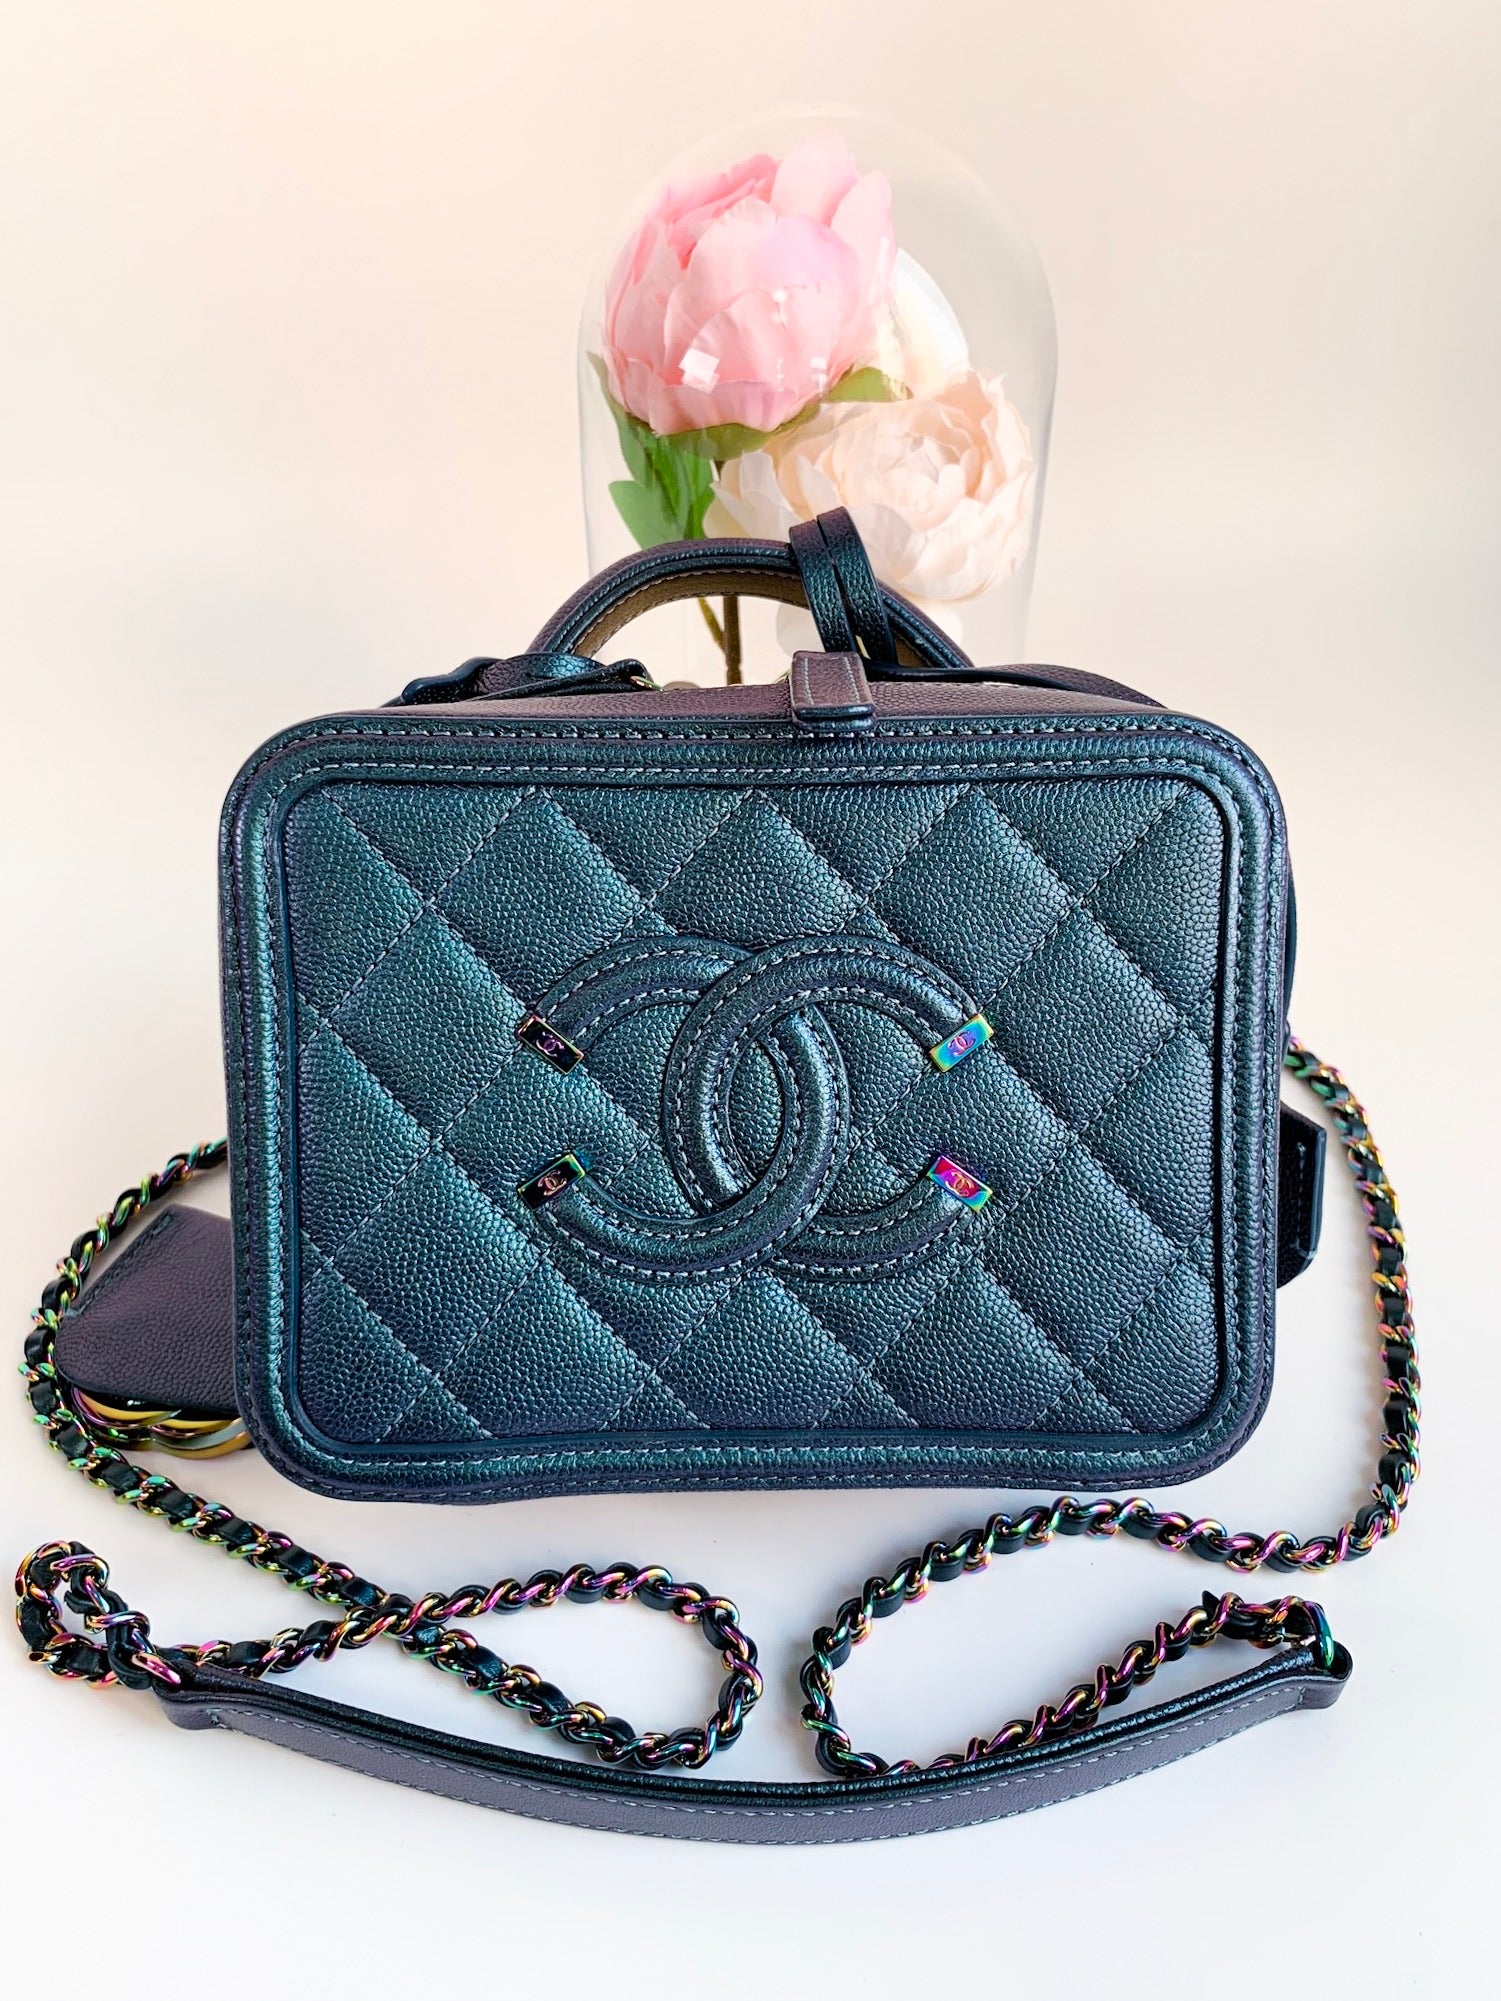 Chanel Iridescent Caviar Quilted Small CC Filigree Vanity Case Dark Tu –  Coco Approved Studio